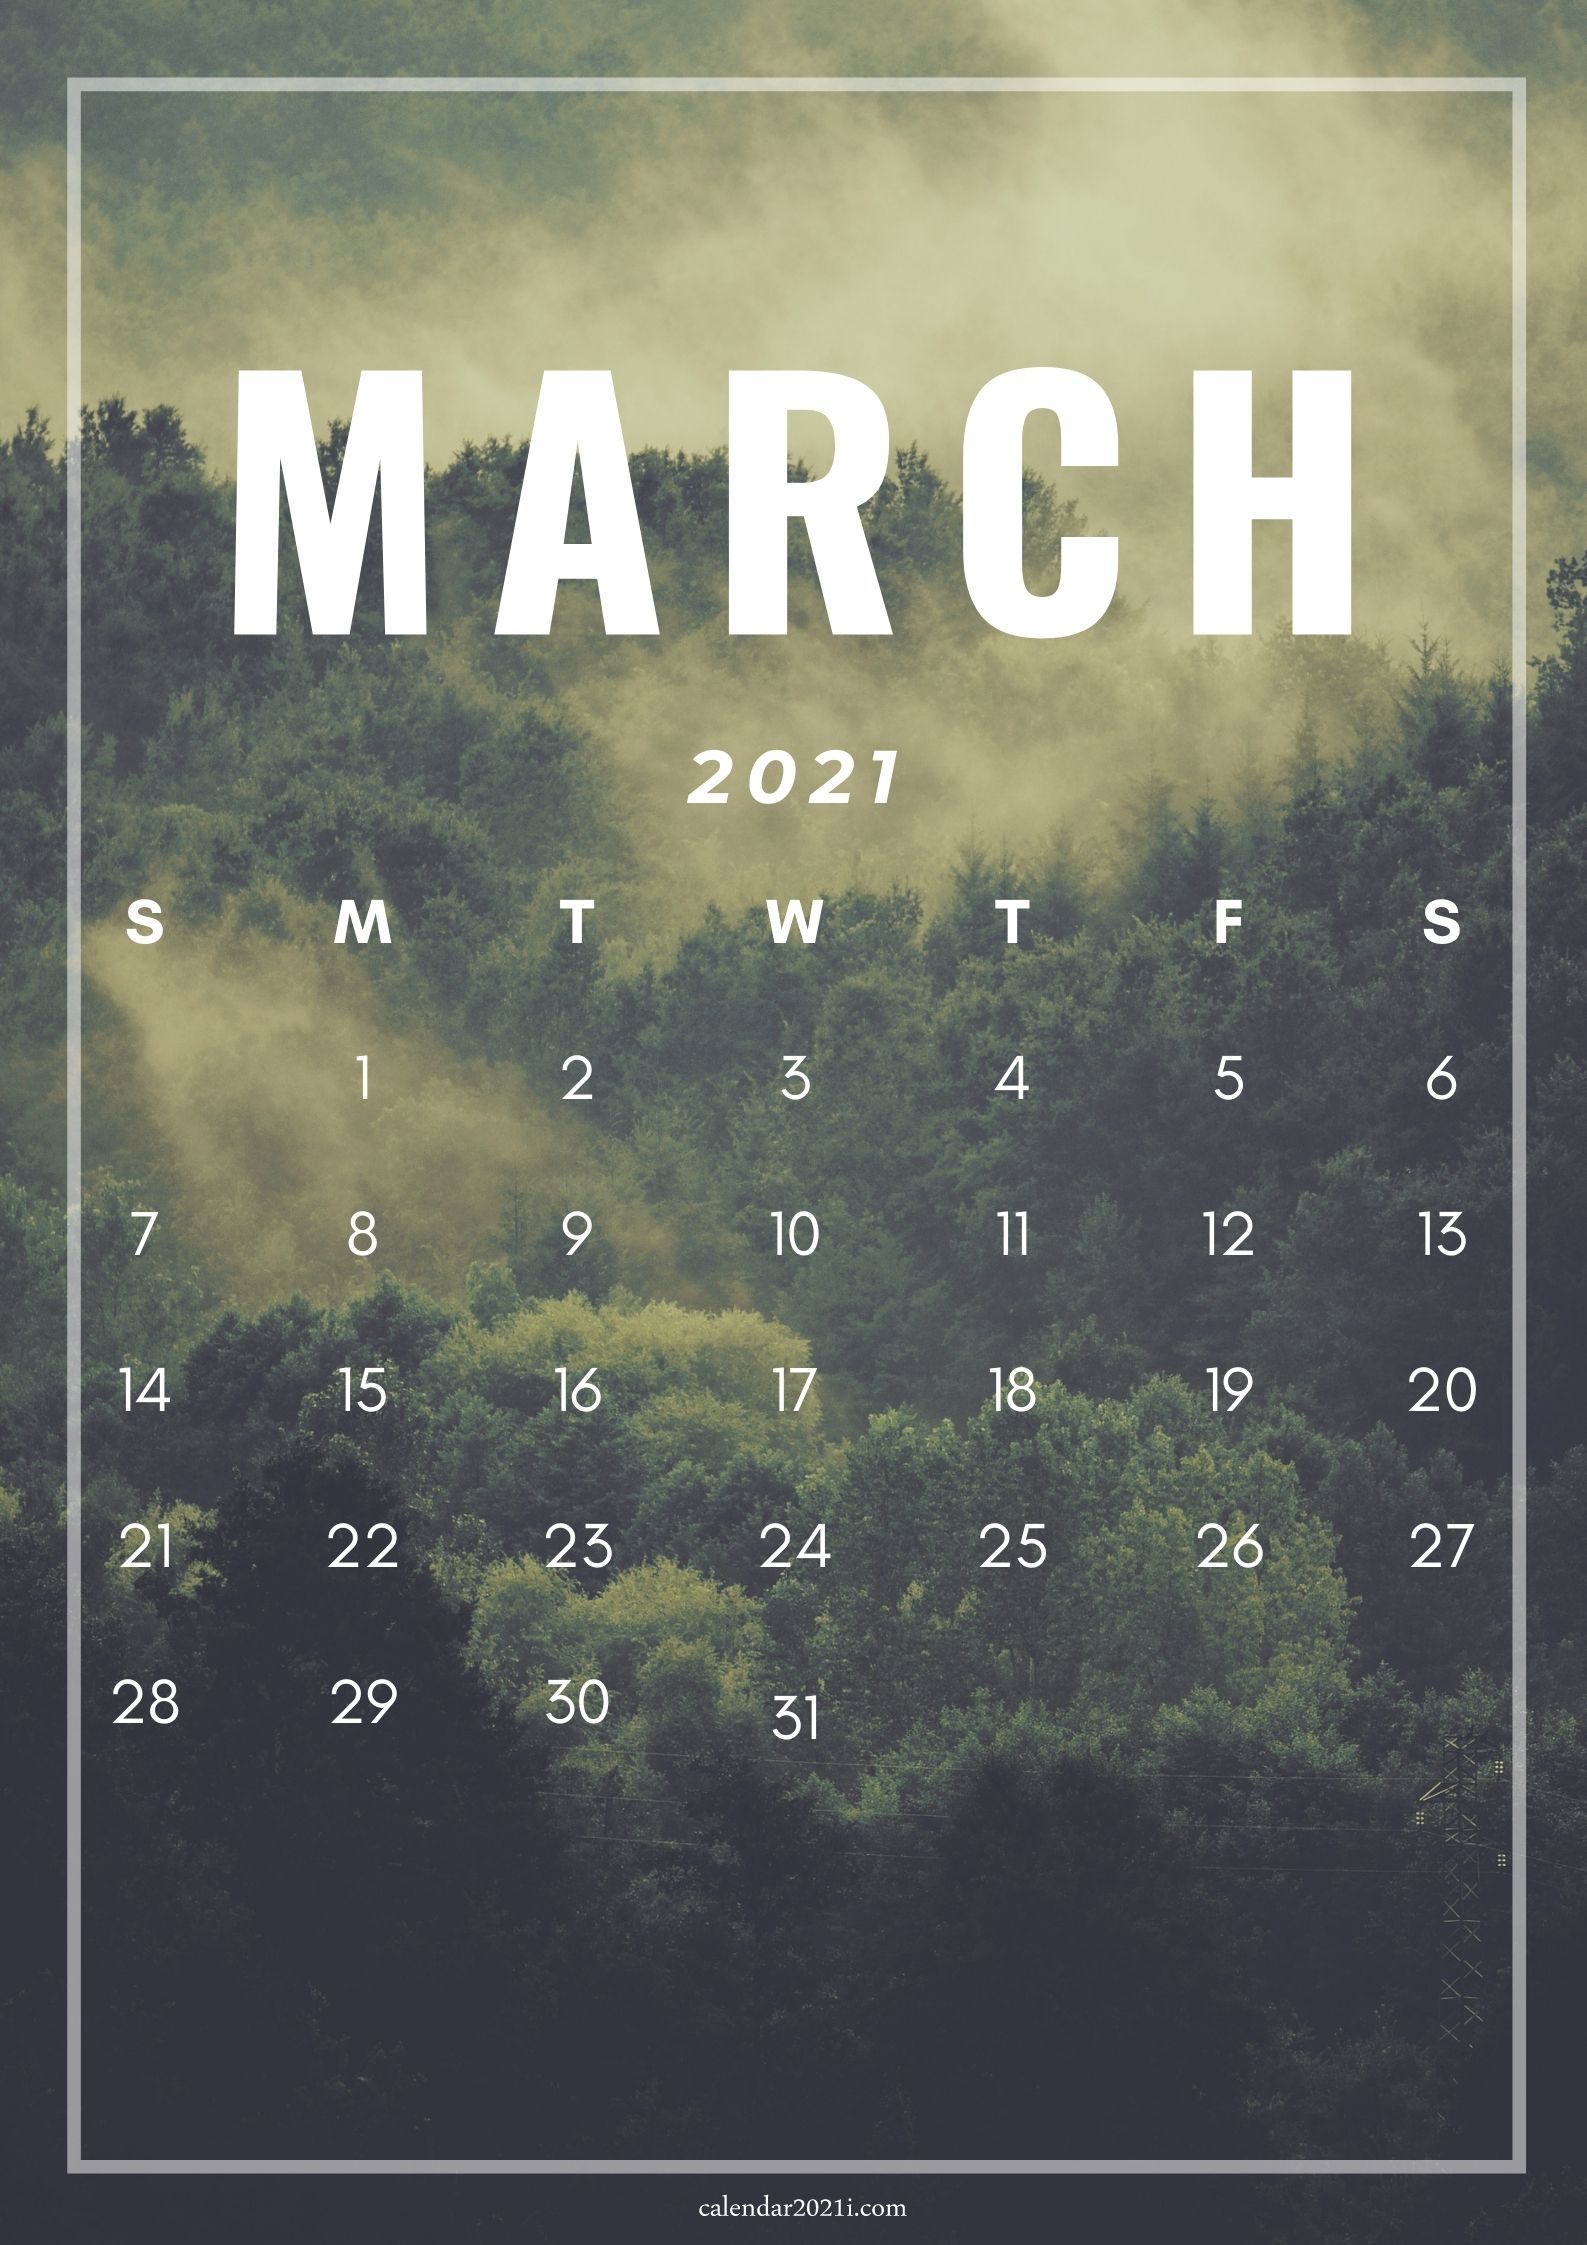 March Mobile Calendar Wallpaper